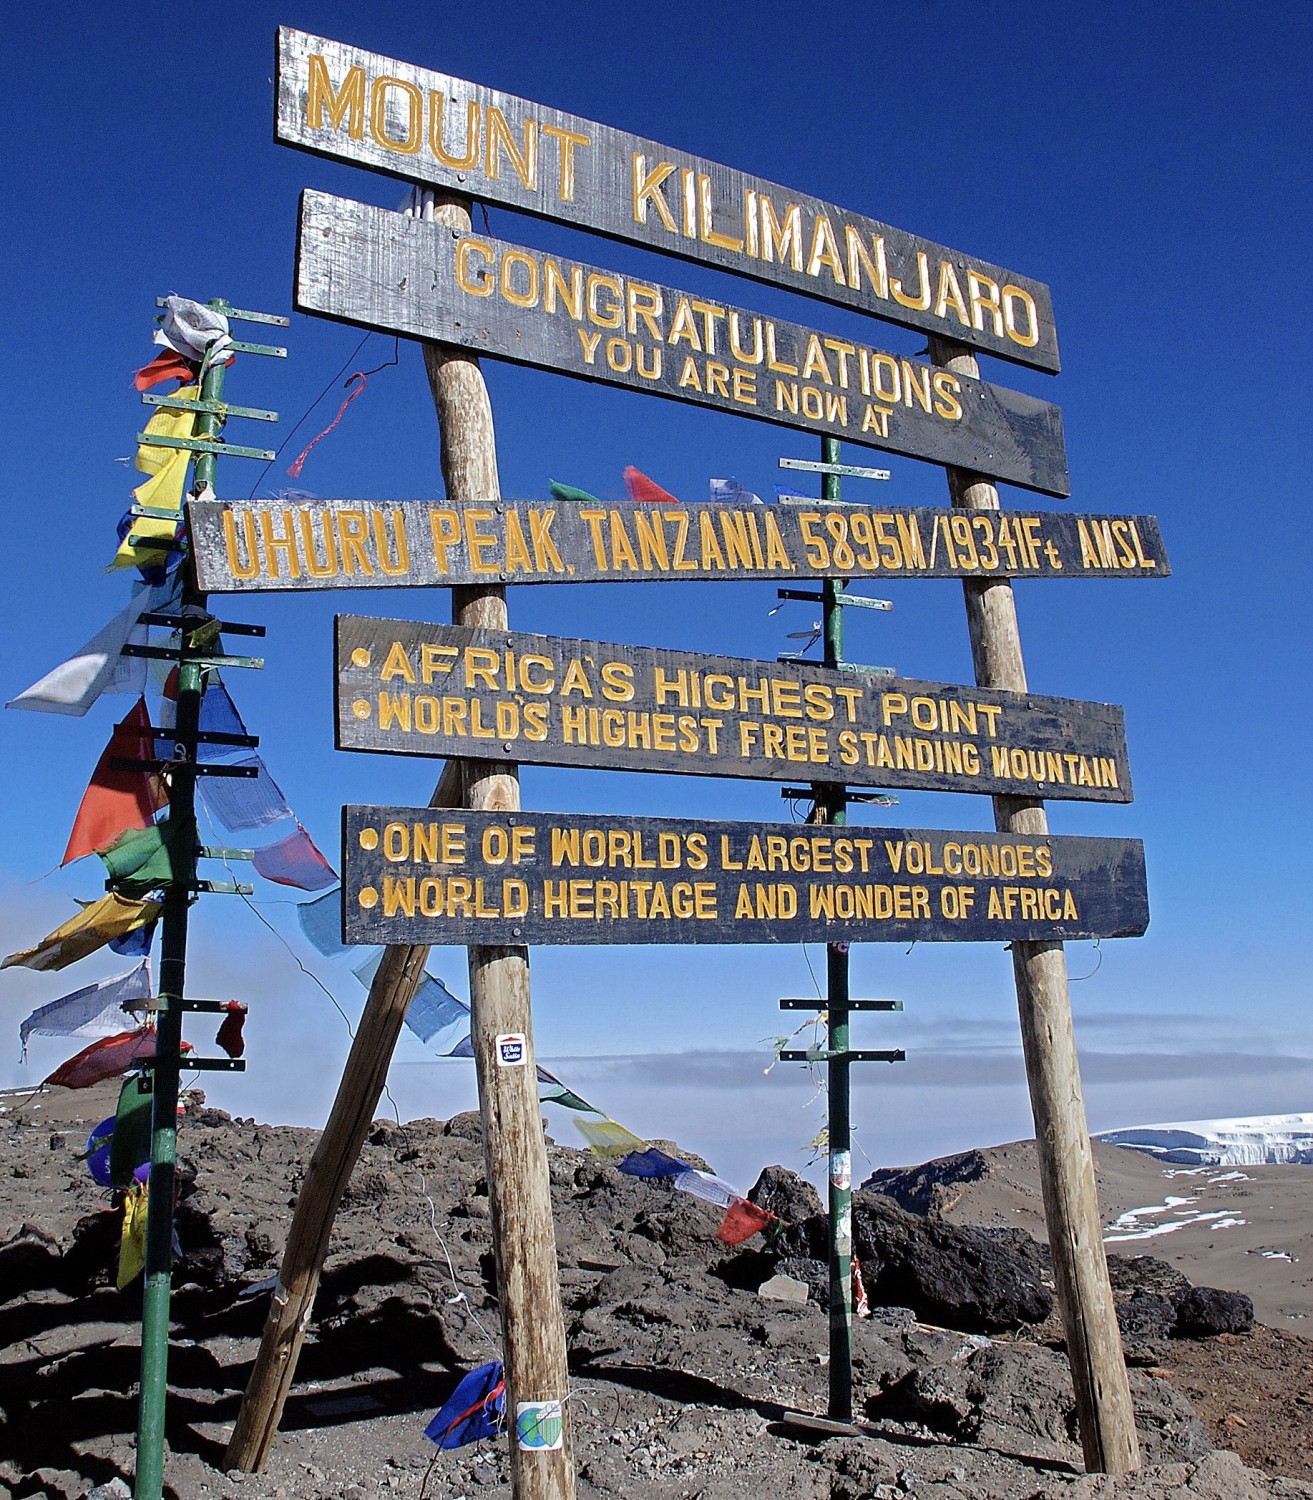 stunning facts about Mount Kilimanjaro, Africa's tallest mountain